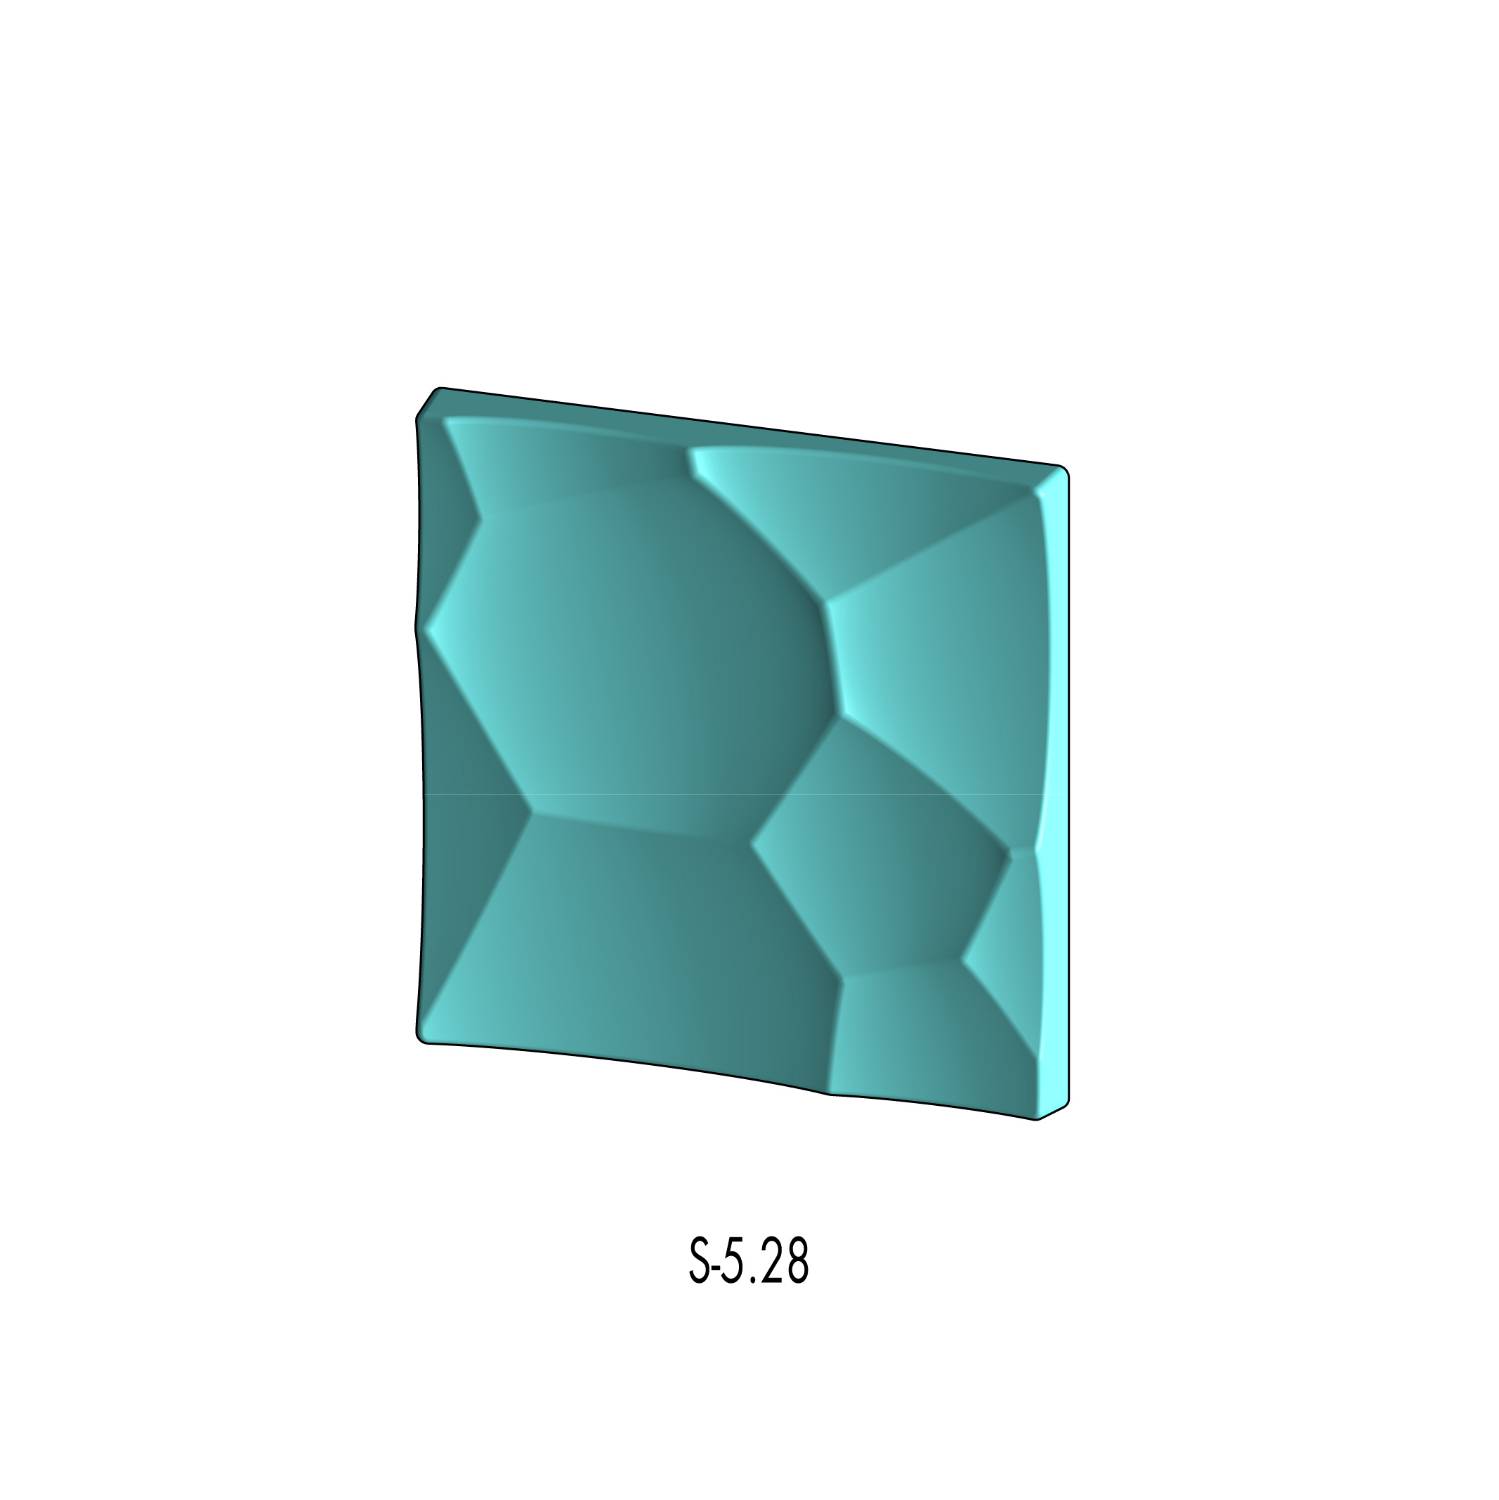 3D Ceiling Tile S-5.28